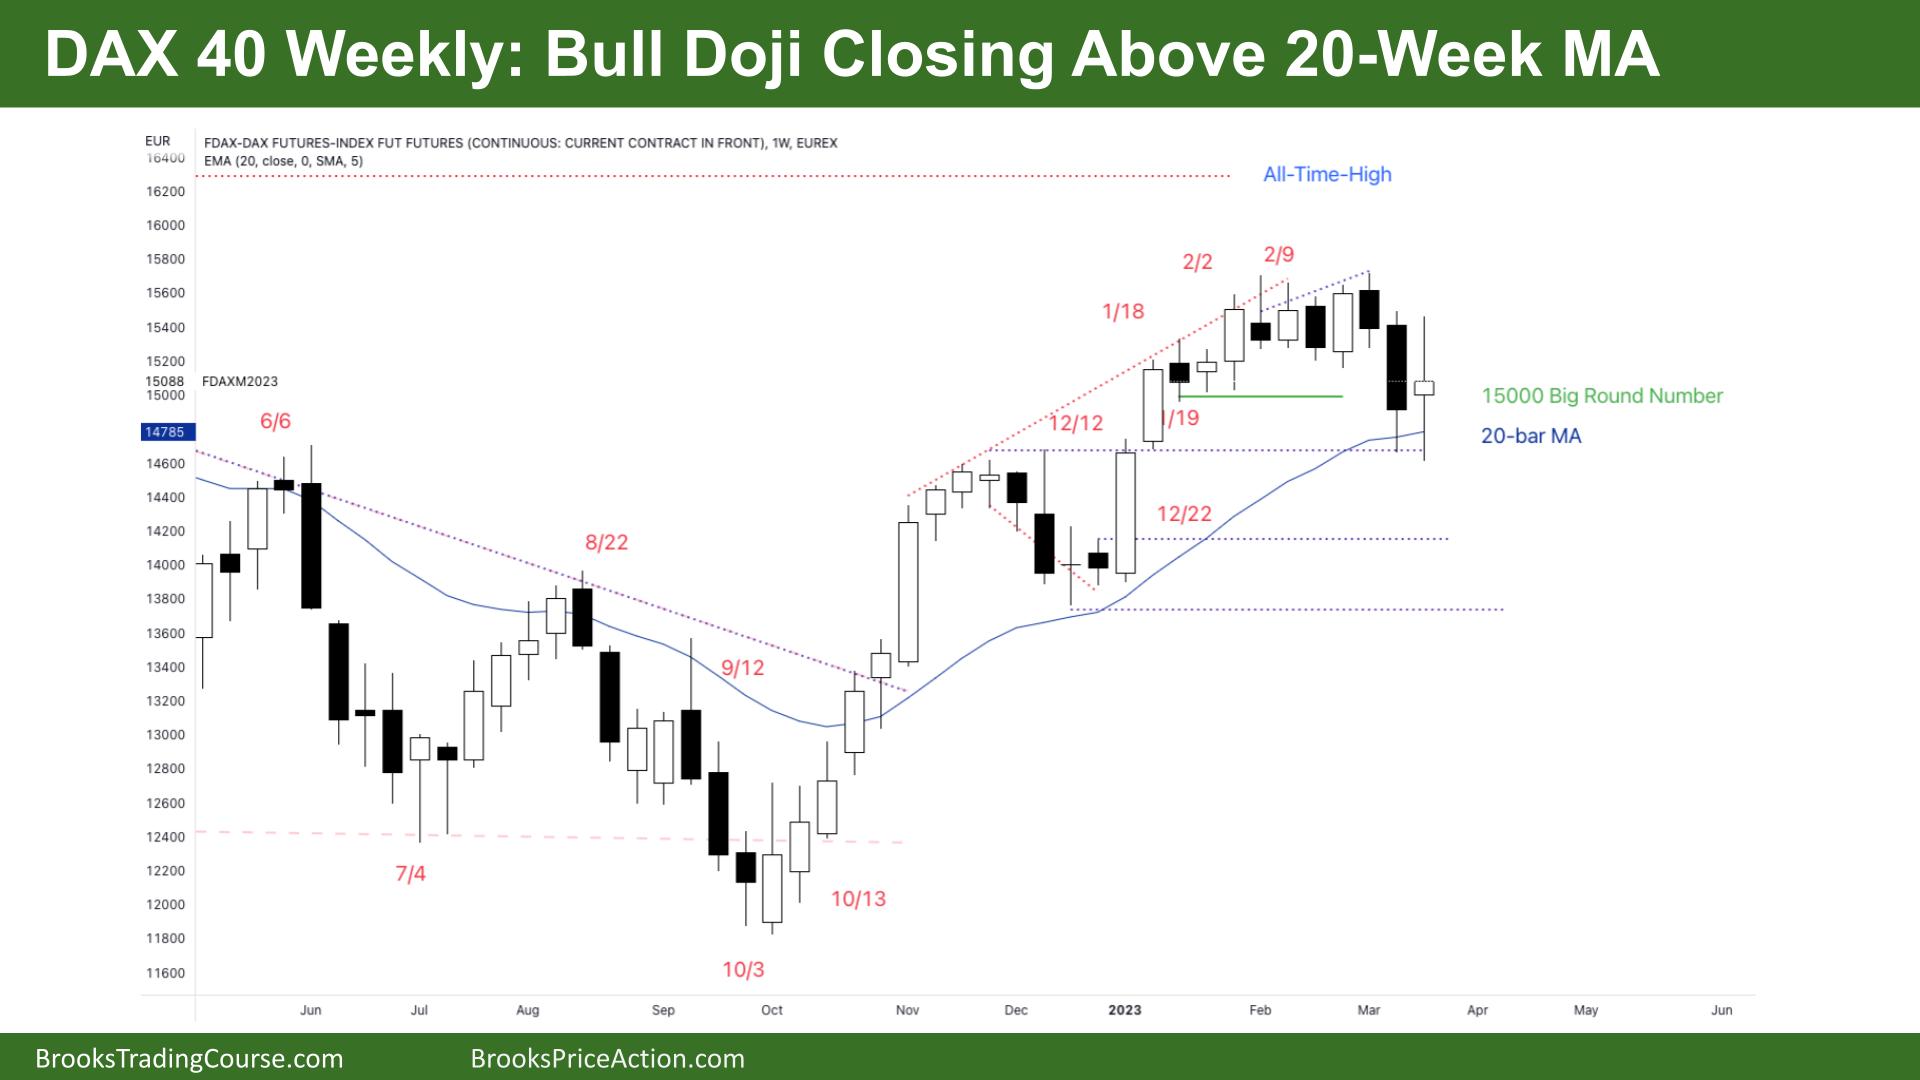 DAX 40 Bull Doji Closing Above 20-Week MA